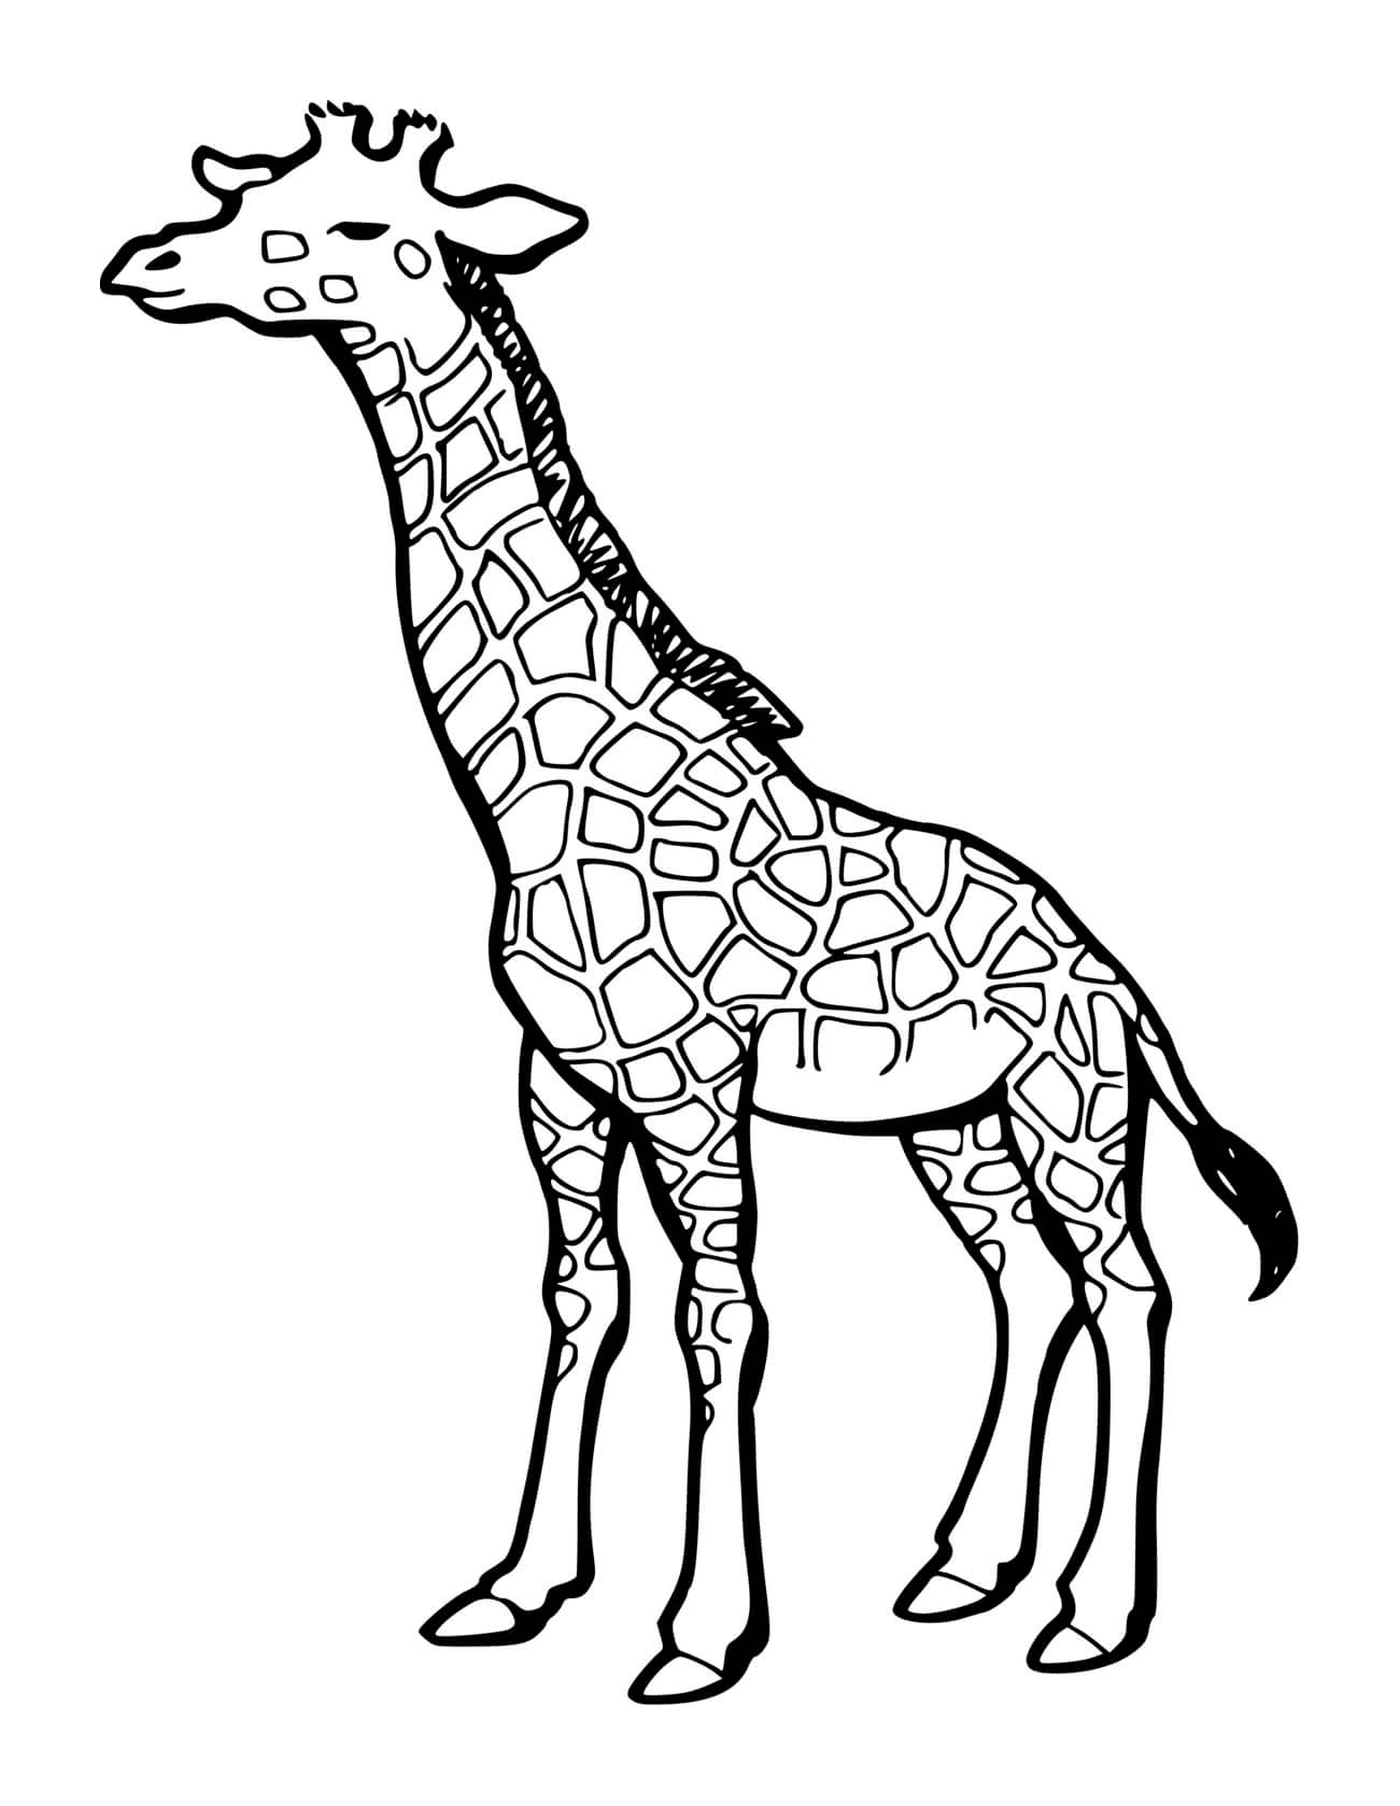  Part of the body of a giraffe 